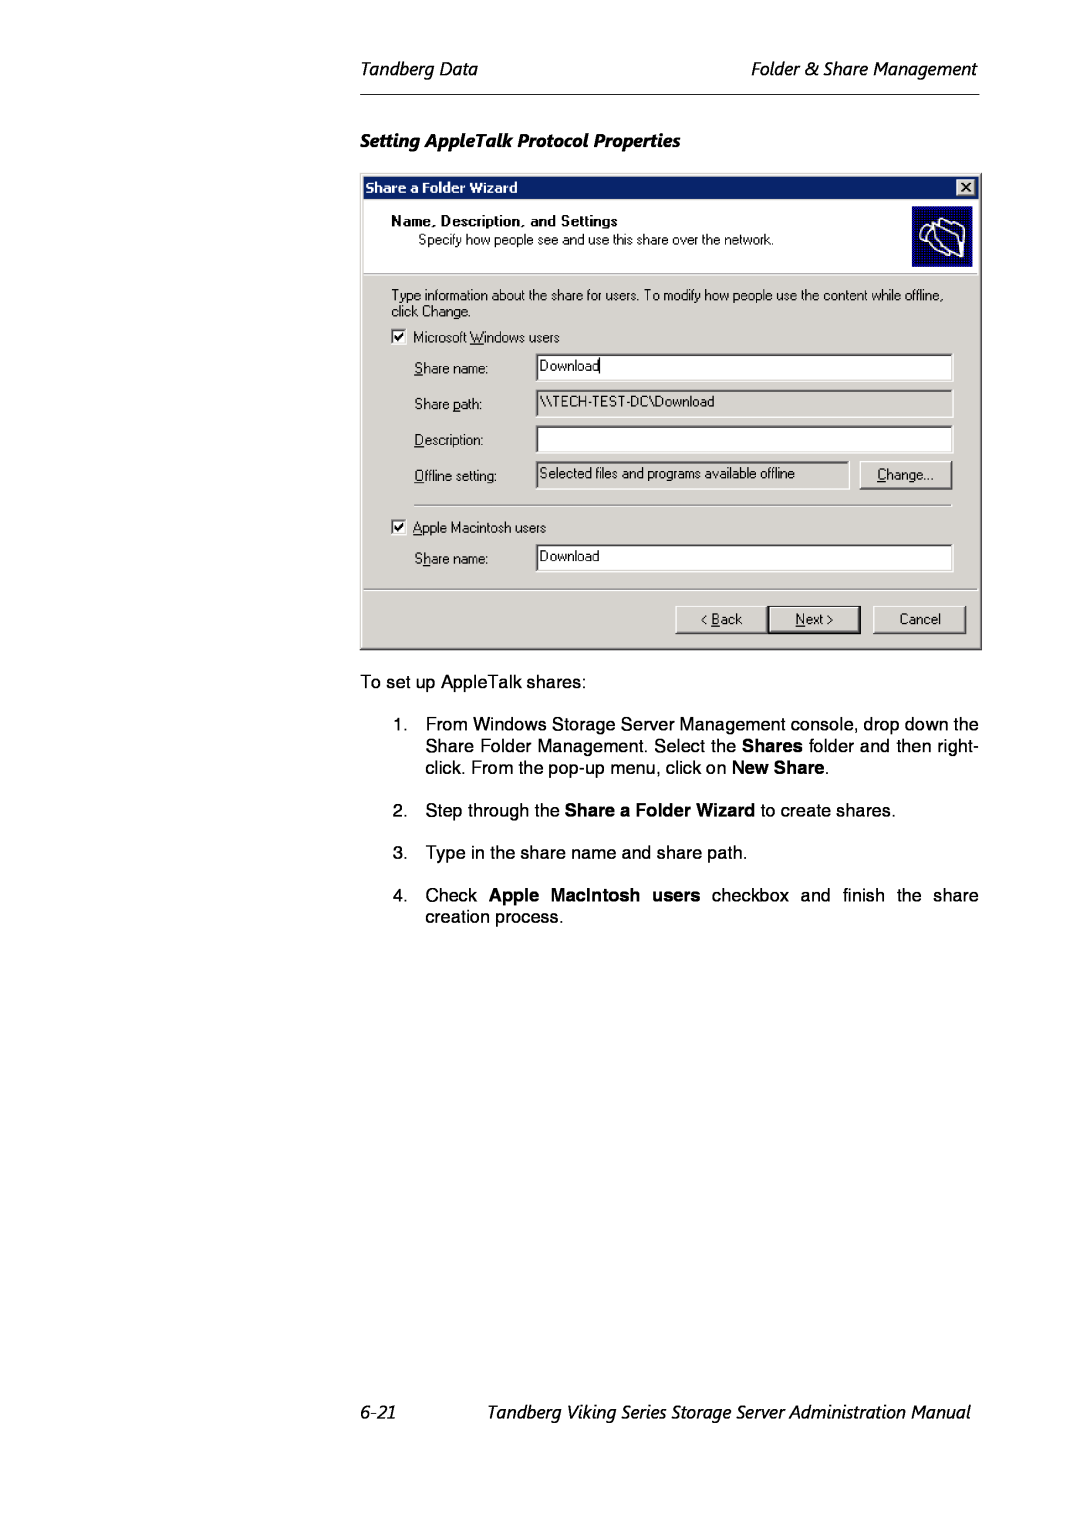 Tandberg Data Viking FS-1500 manual Setting AppleTalk Protocol Properties, 6-21, Tandberg DataFolder & Share Management 